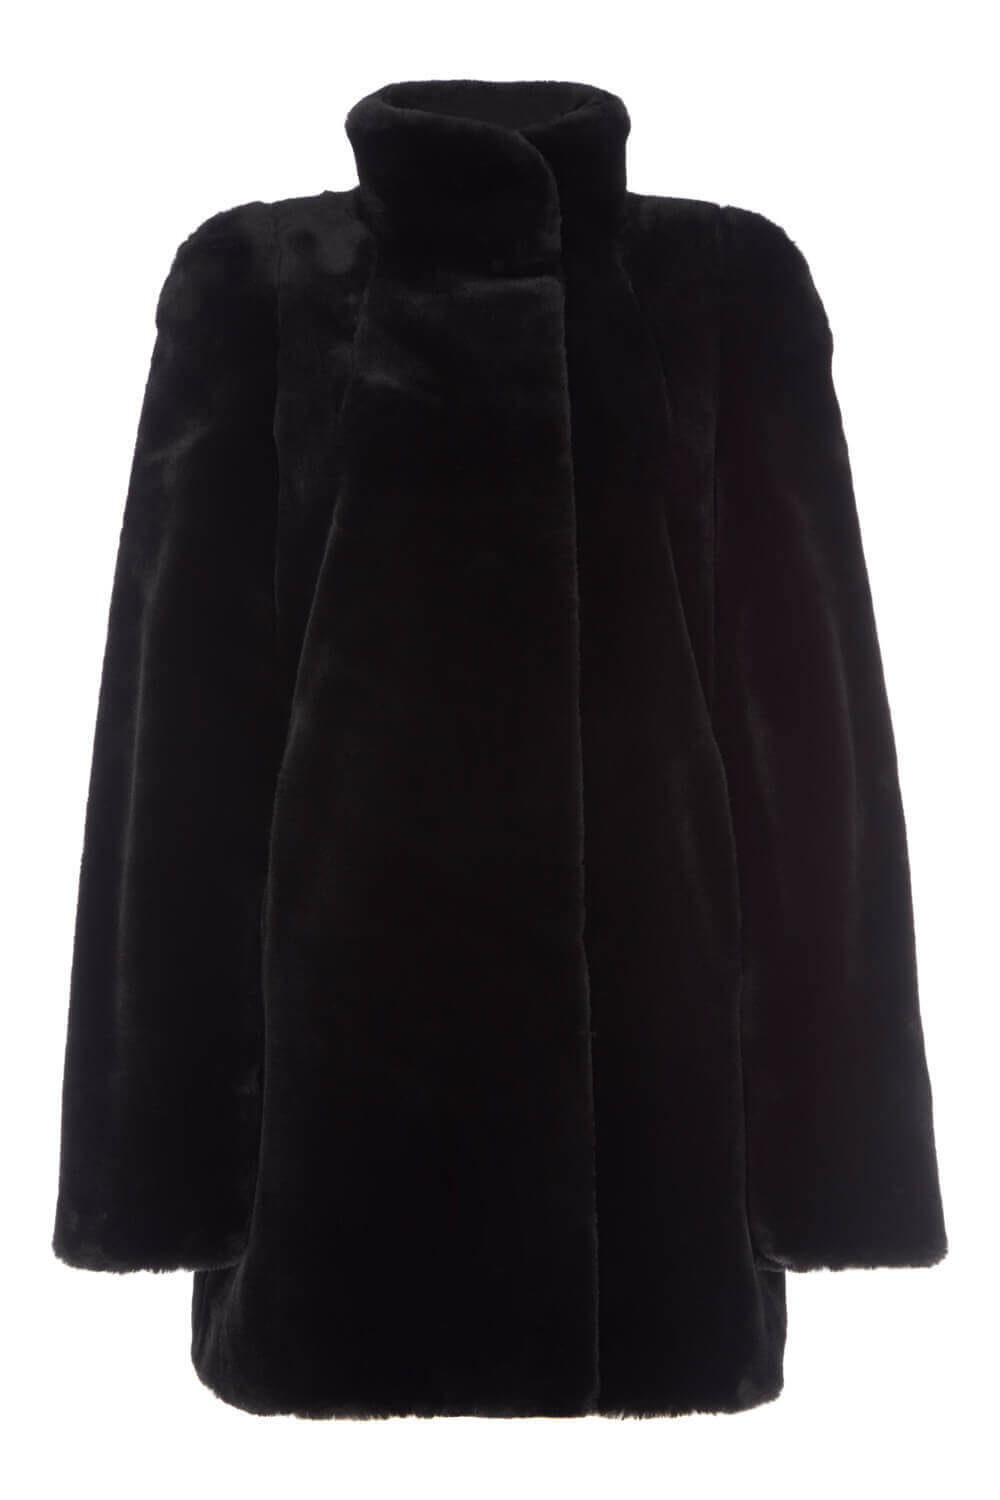 Black Faux Fur Swing Coat, Image 5 of 5